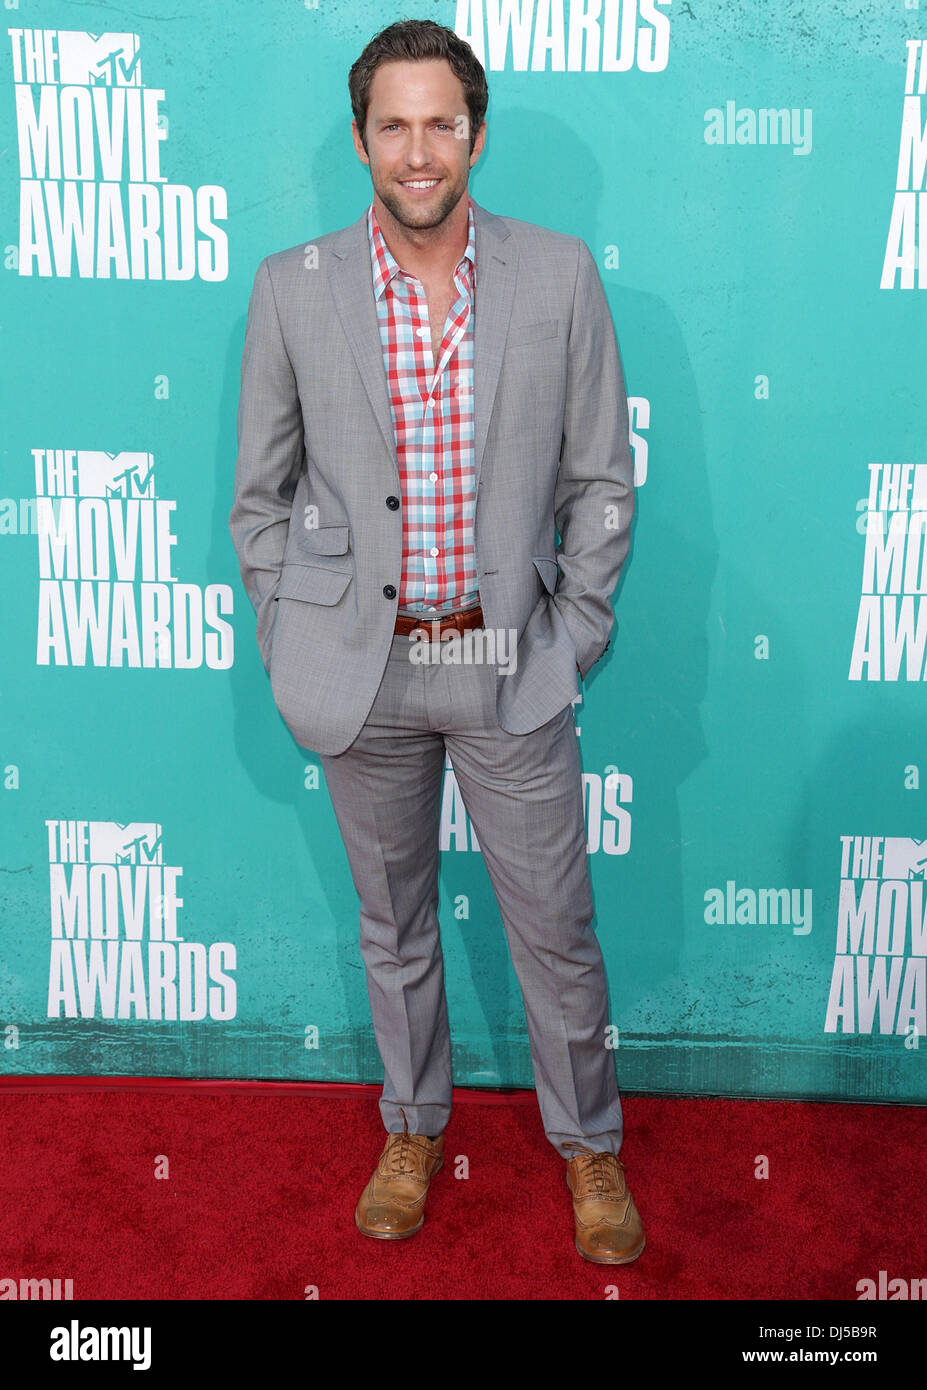 Mike Faiola MTV Movie Awards at Universal Studios - Arrivals Universal City, California - 06.03.12 Stock Photo